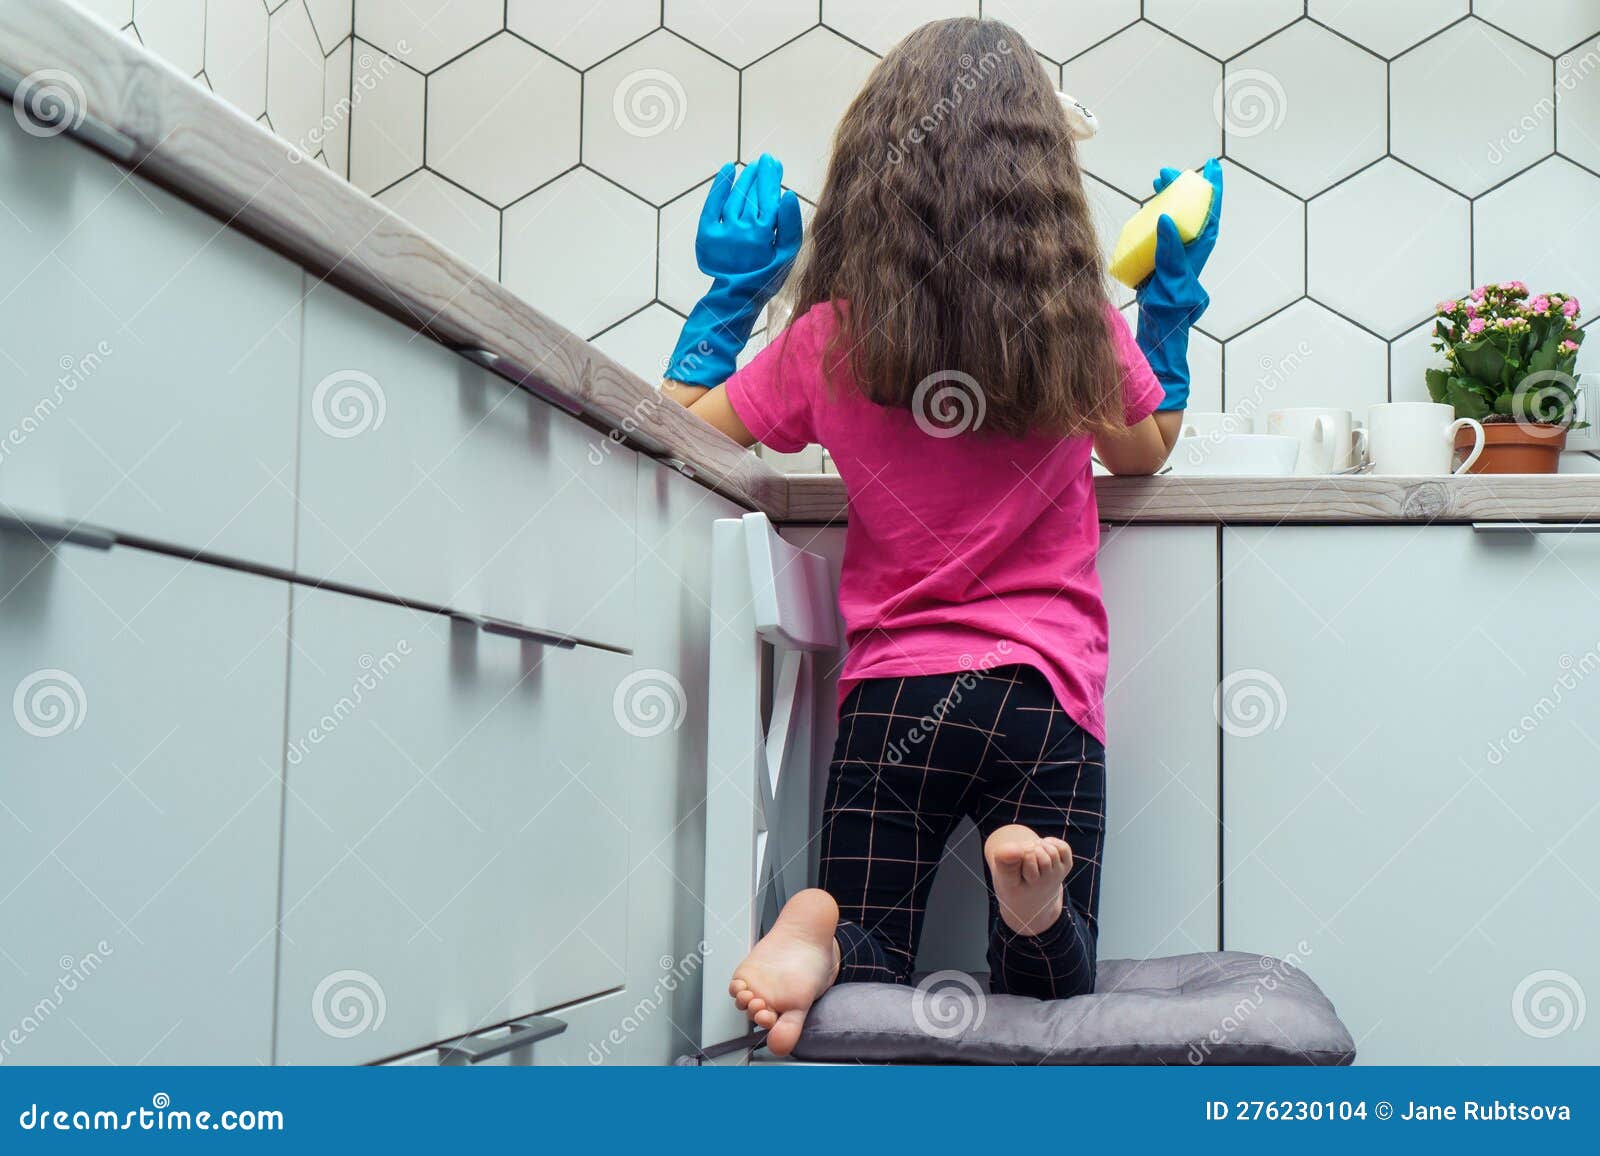 https://thumbs.dreamstime.com/z/back-view-little-girl-long-dark-hair-wearing-pink-t-shirt-black-leggings-big-blue-gloves-sitting-stool-near-sink-276230104.jpg